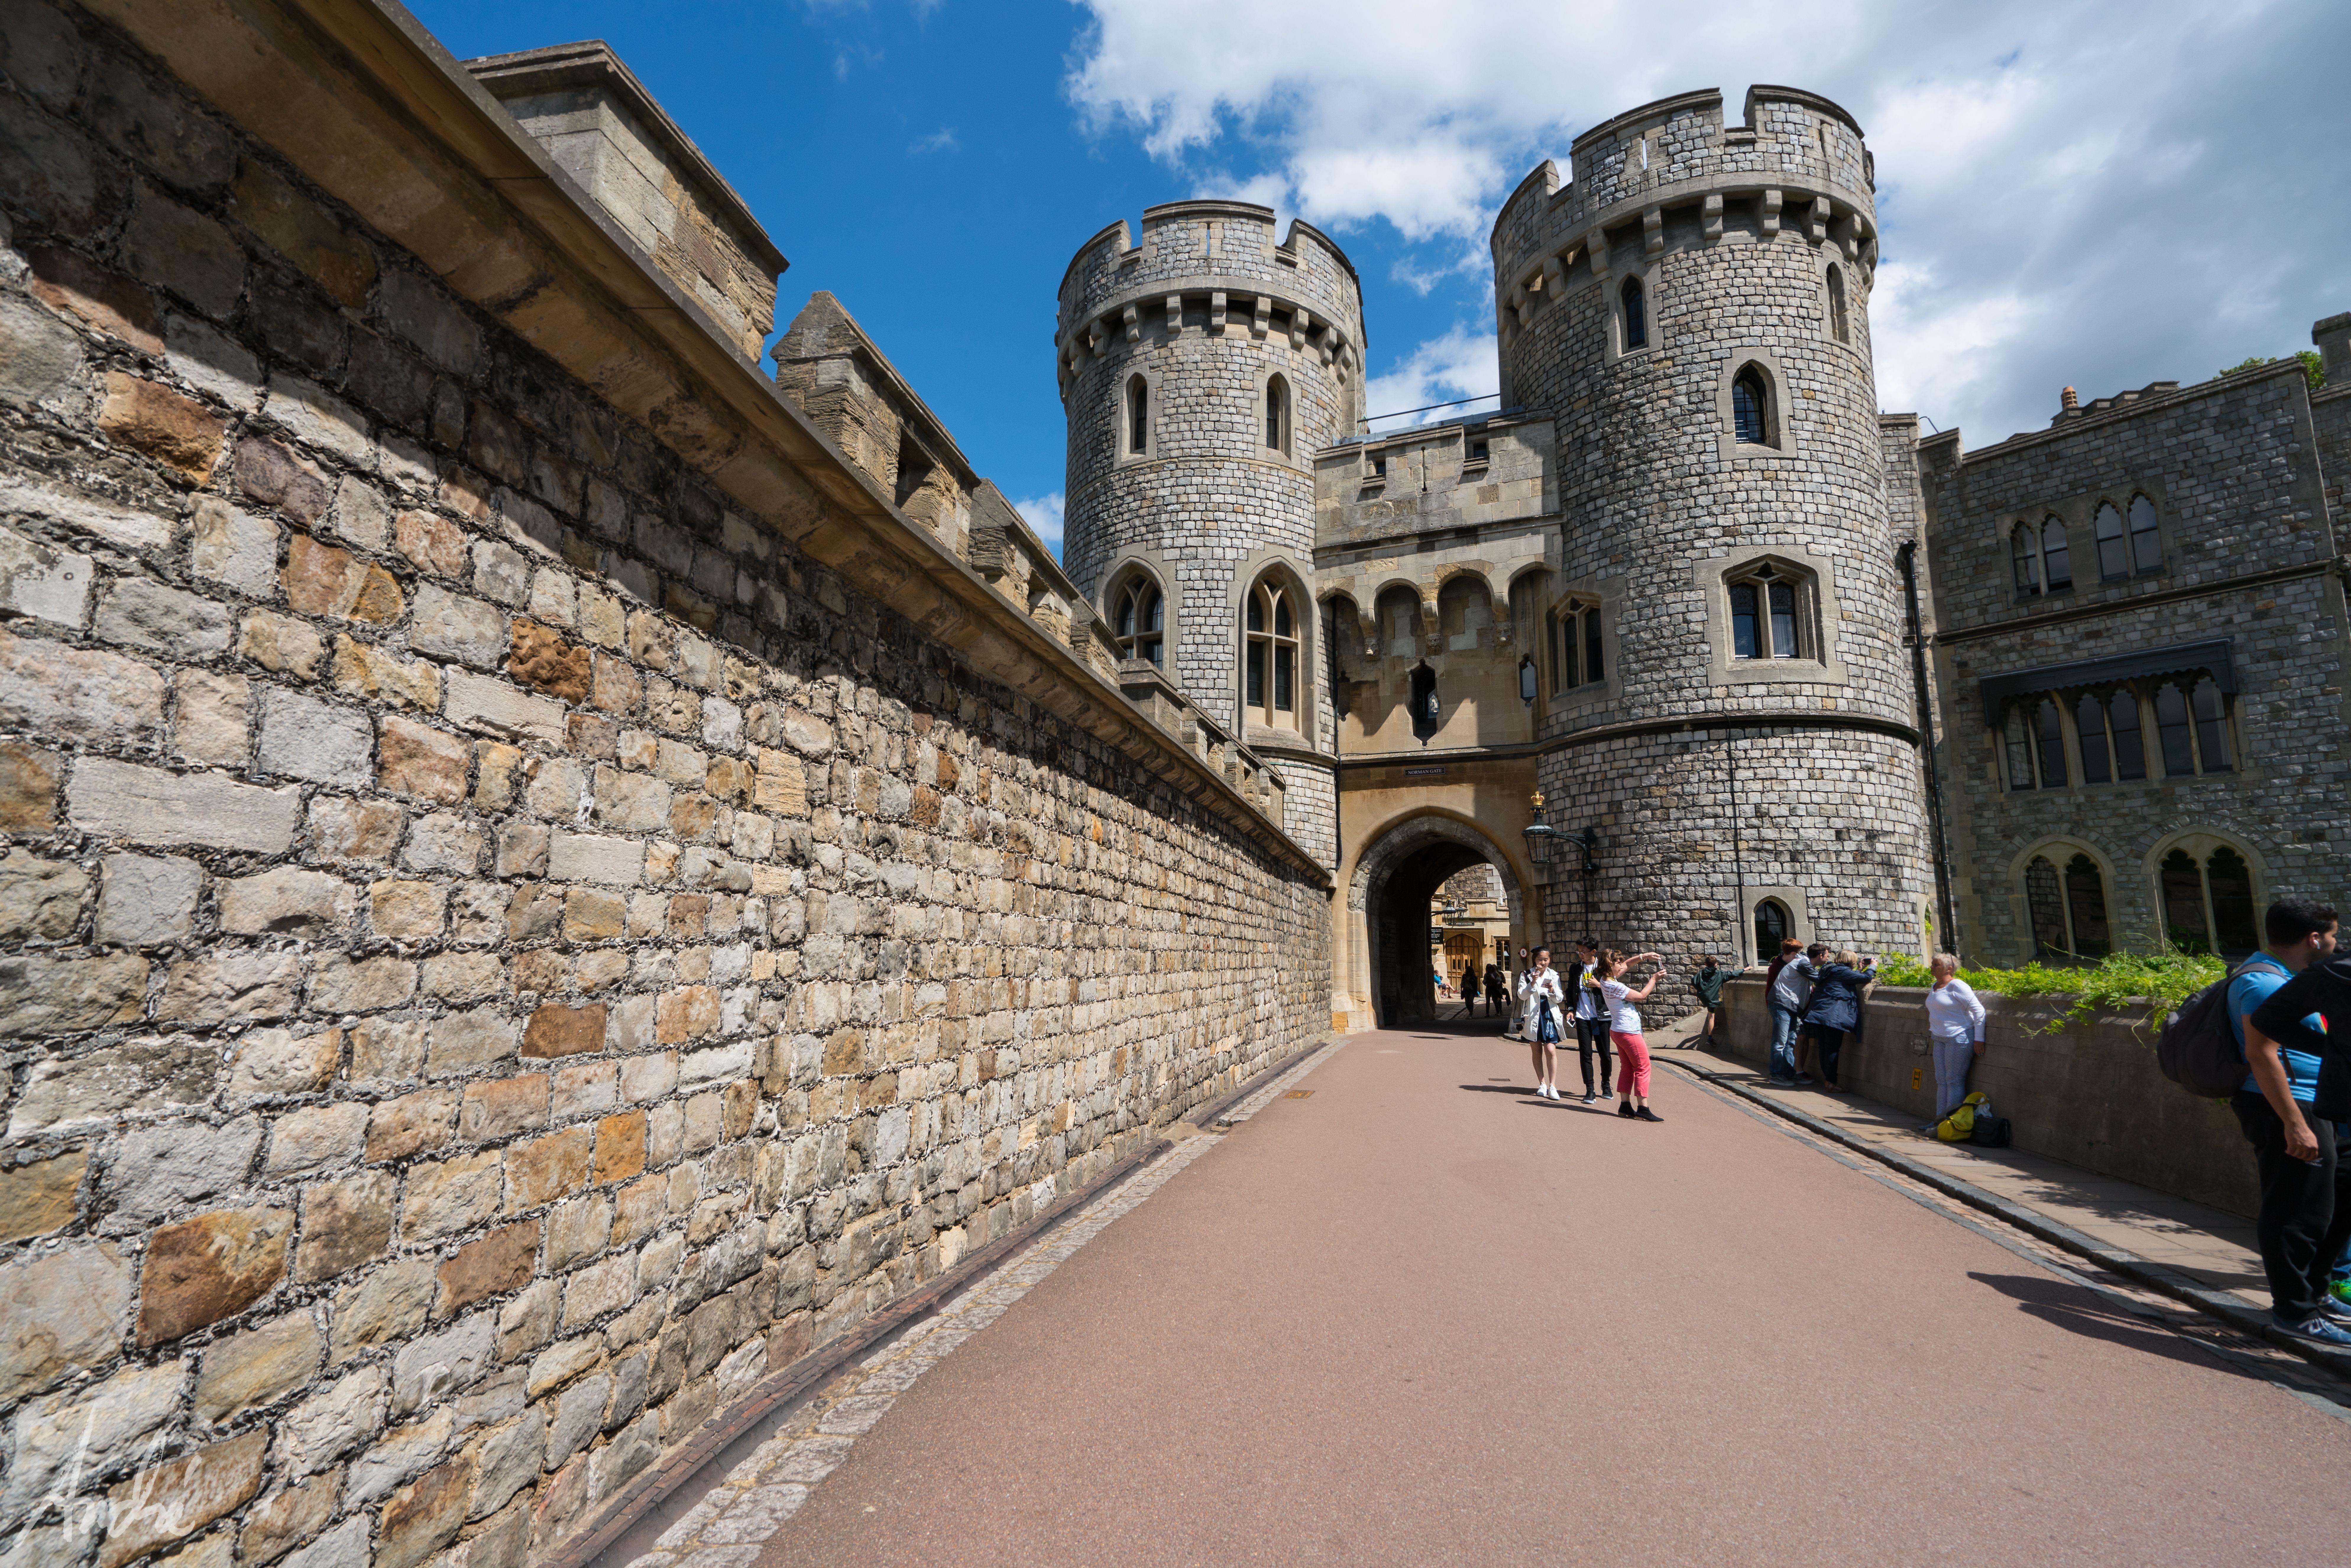 About Windsor Castle